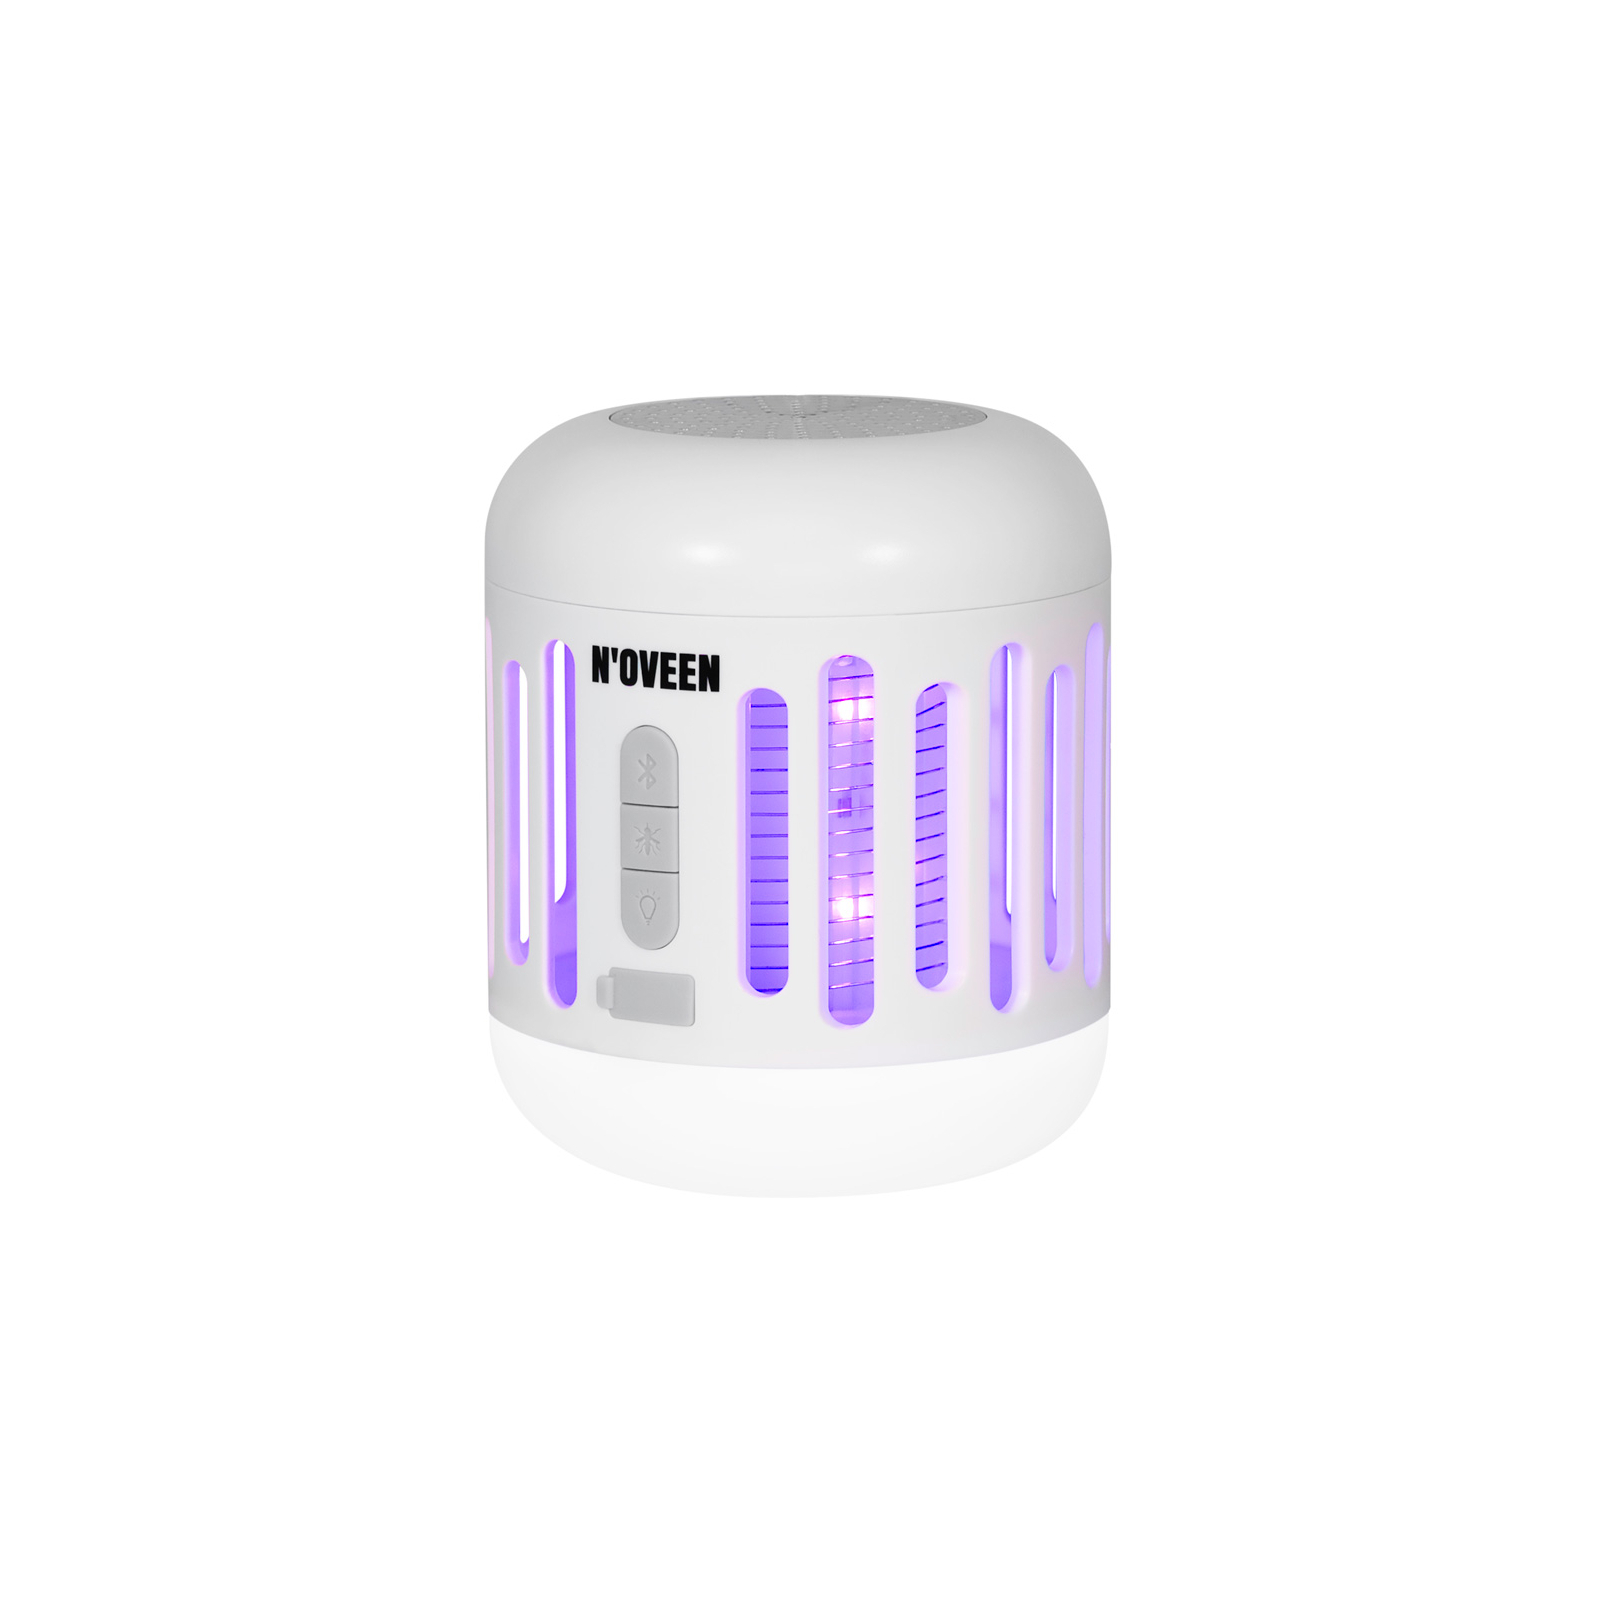 Инсектицидная лампа N'oveen IKN863 (RL074516) изображение 3